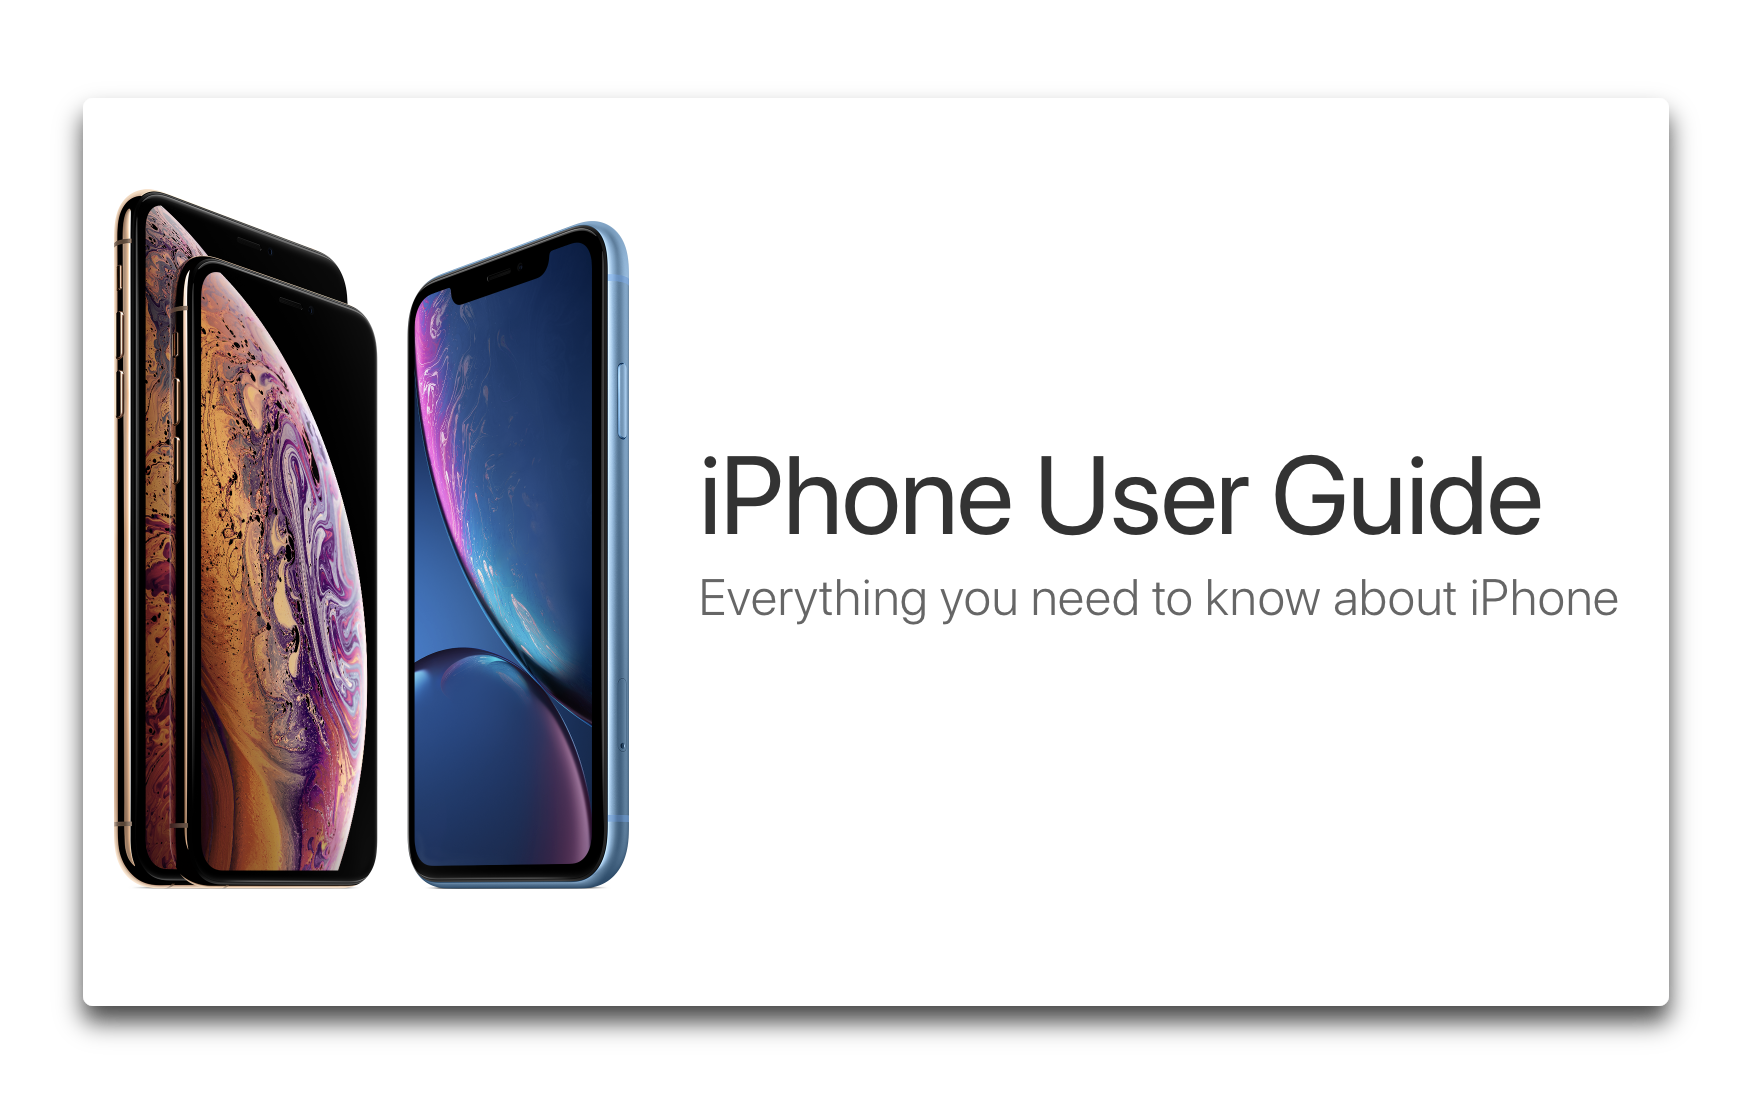 Apple、グループFaceTimeやデュアルSIMに対応したiOS 12.1用「iPhone User Guide」を公開